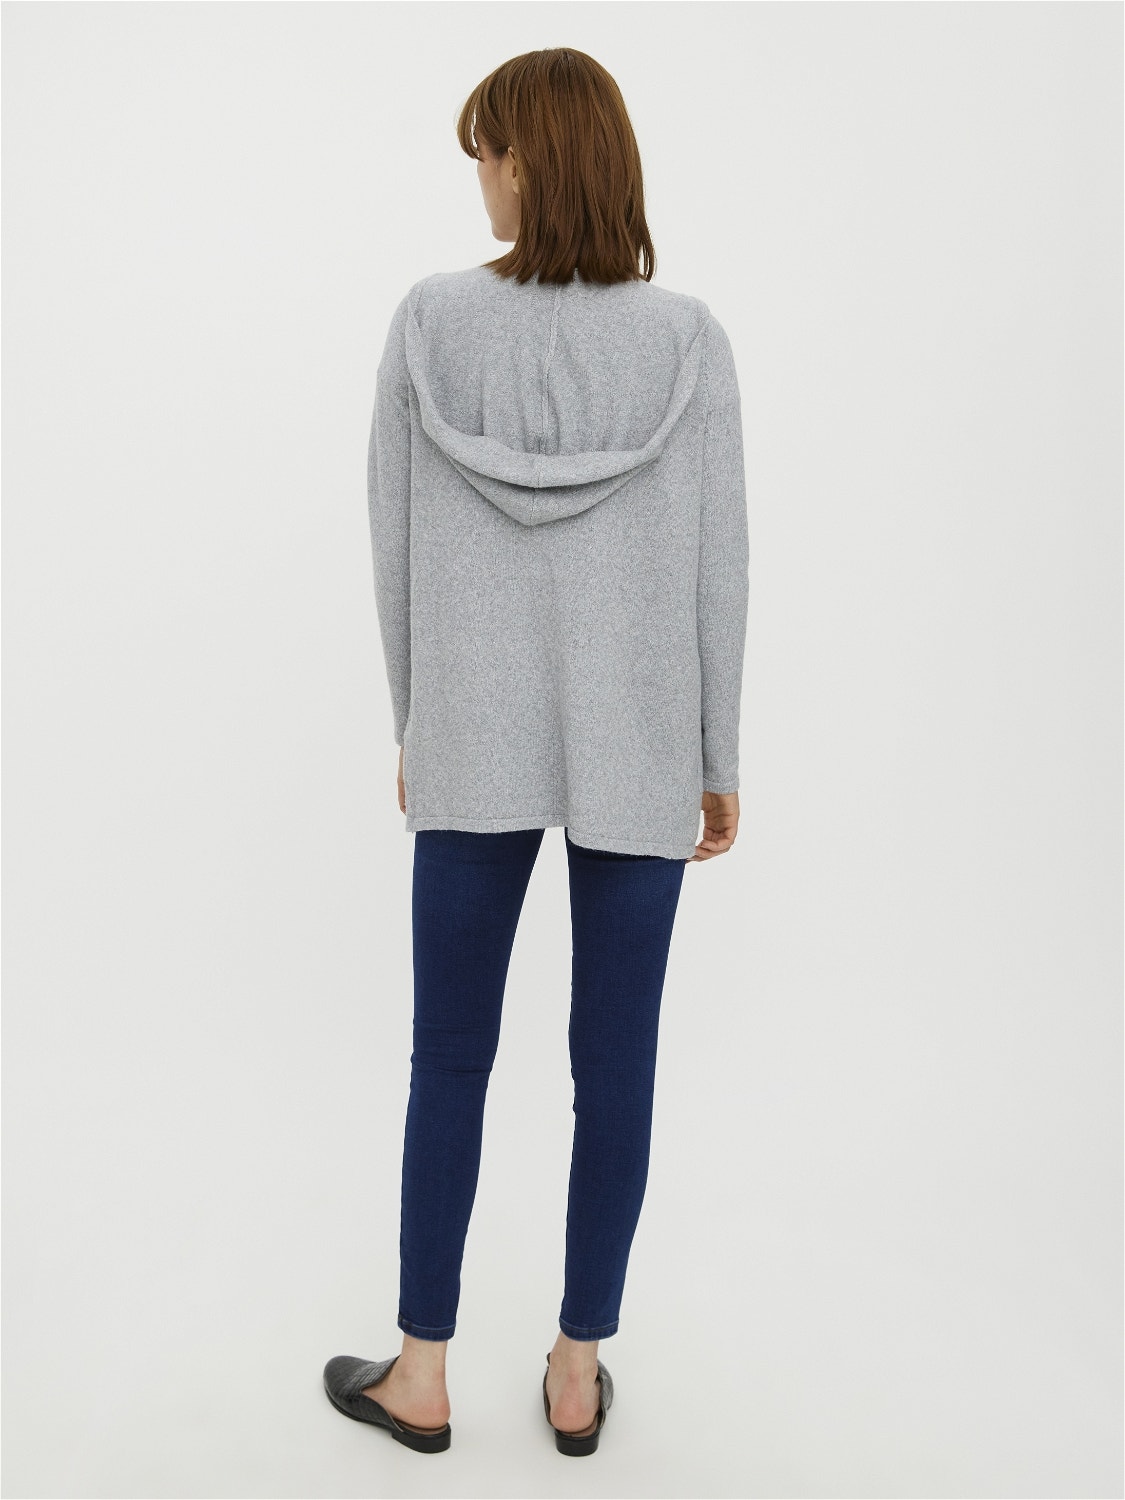 Moda® Vero Knit Light | Cardigan Grey | VMDOFFY